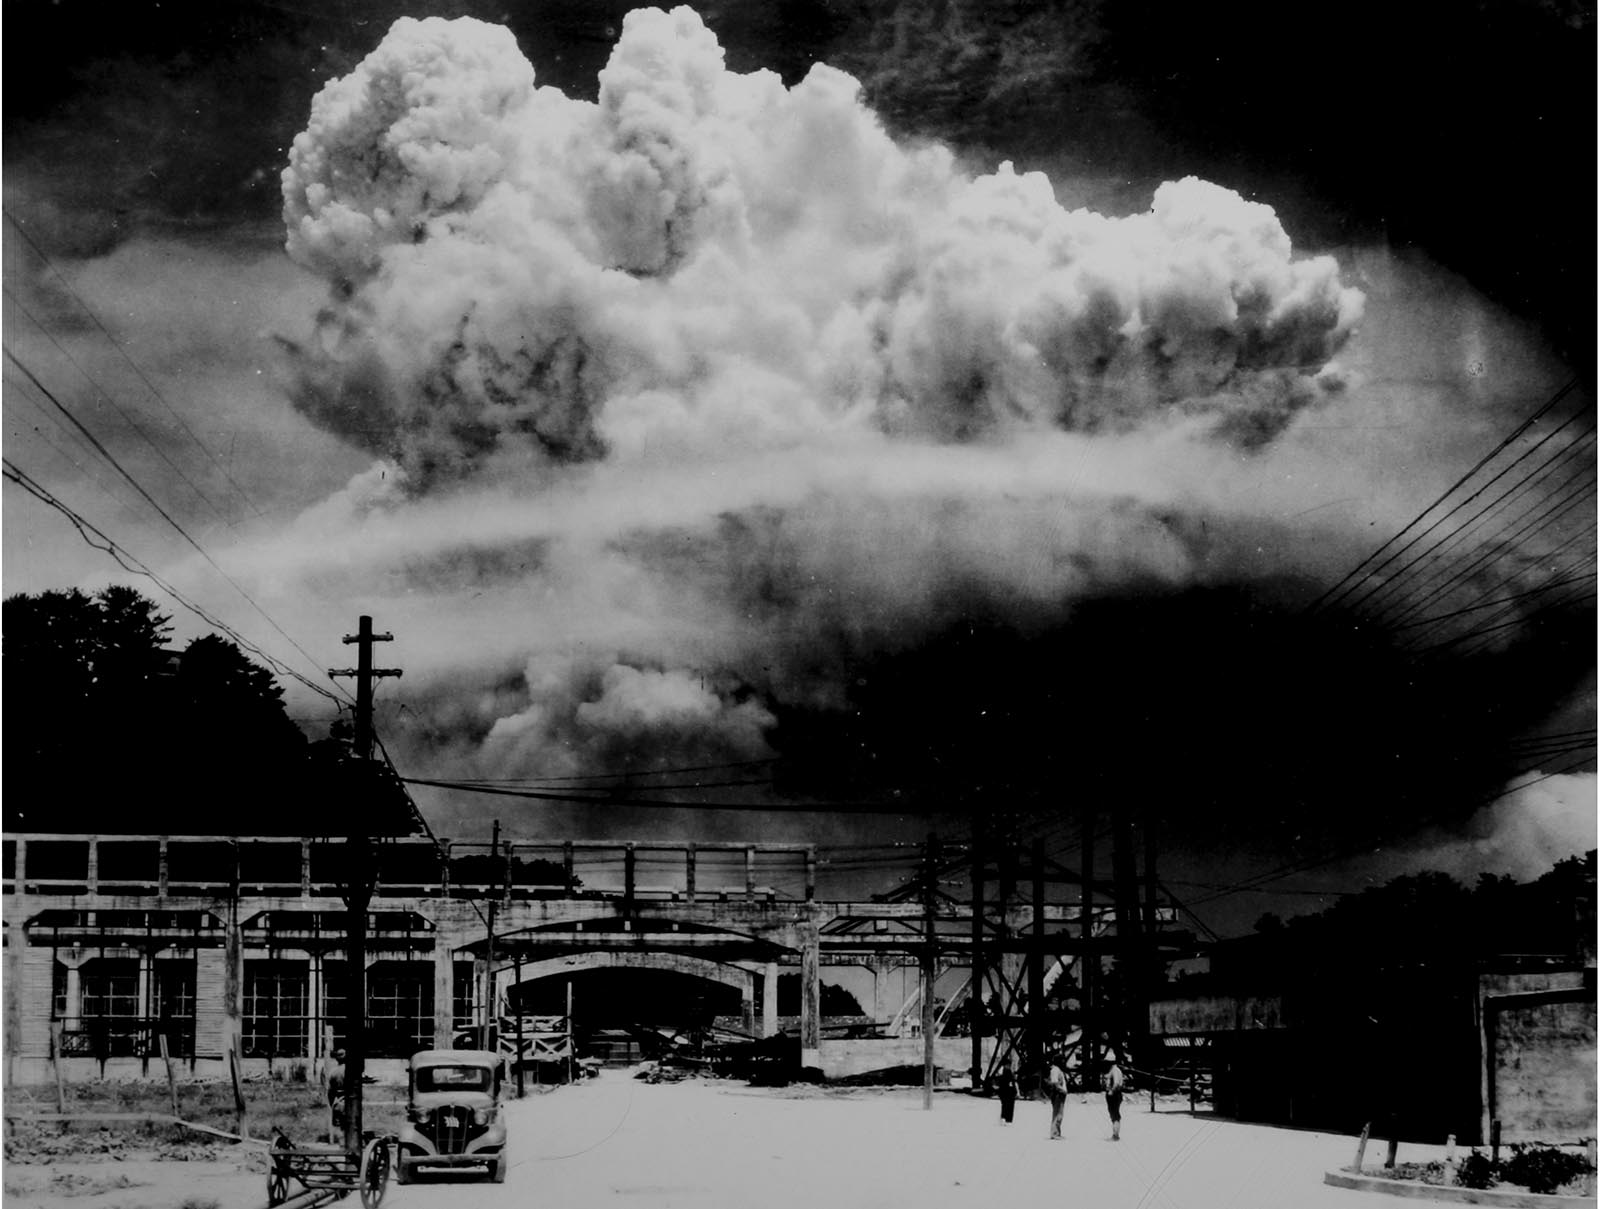 Unidentified Japanese photographer, Nagasaki, August 9, 1945